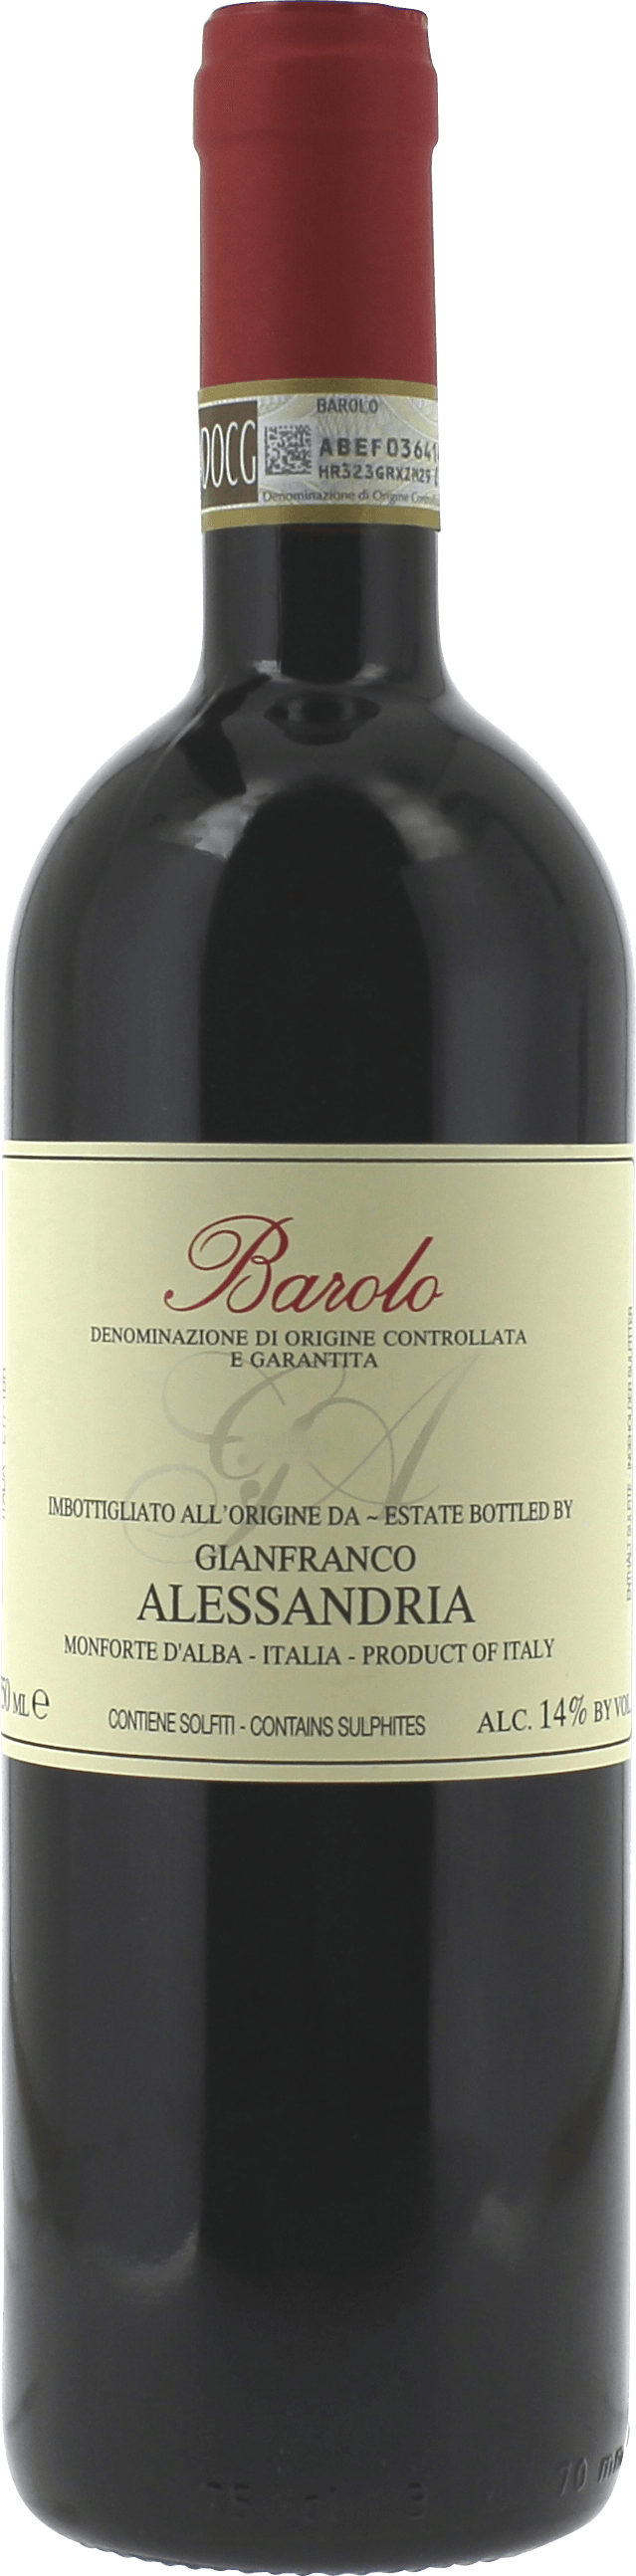 Alessandria - nebbiolo - barolo 2015  , Vin italien